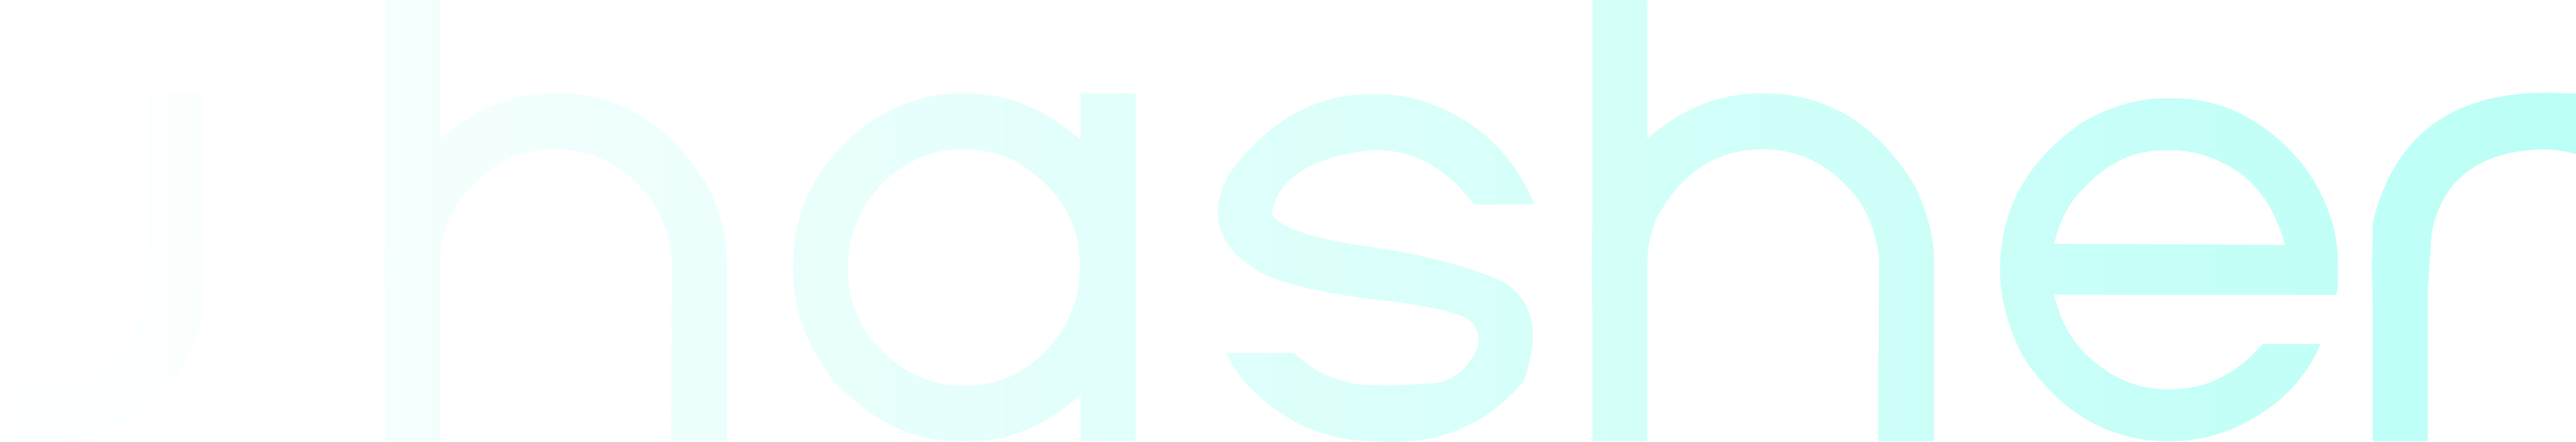 J hasher text logo